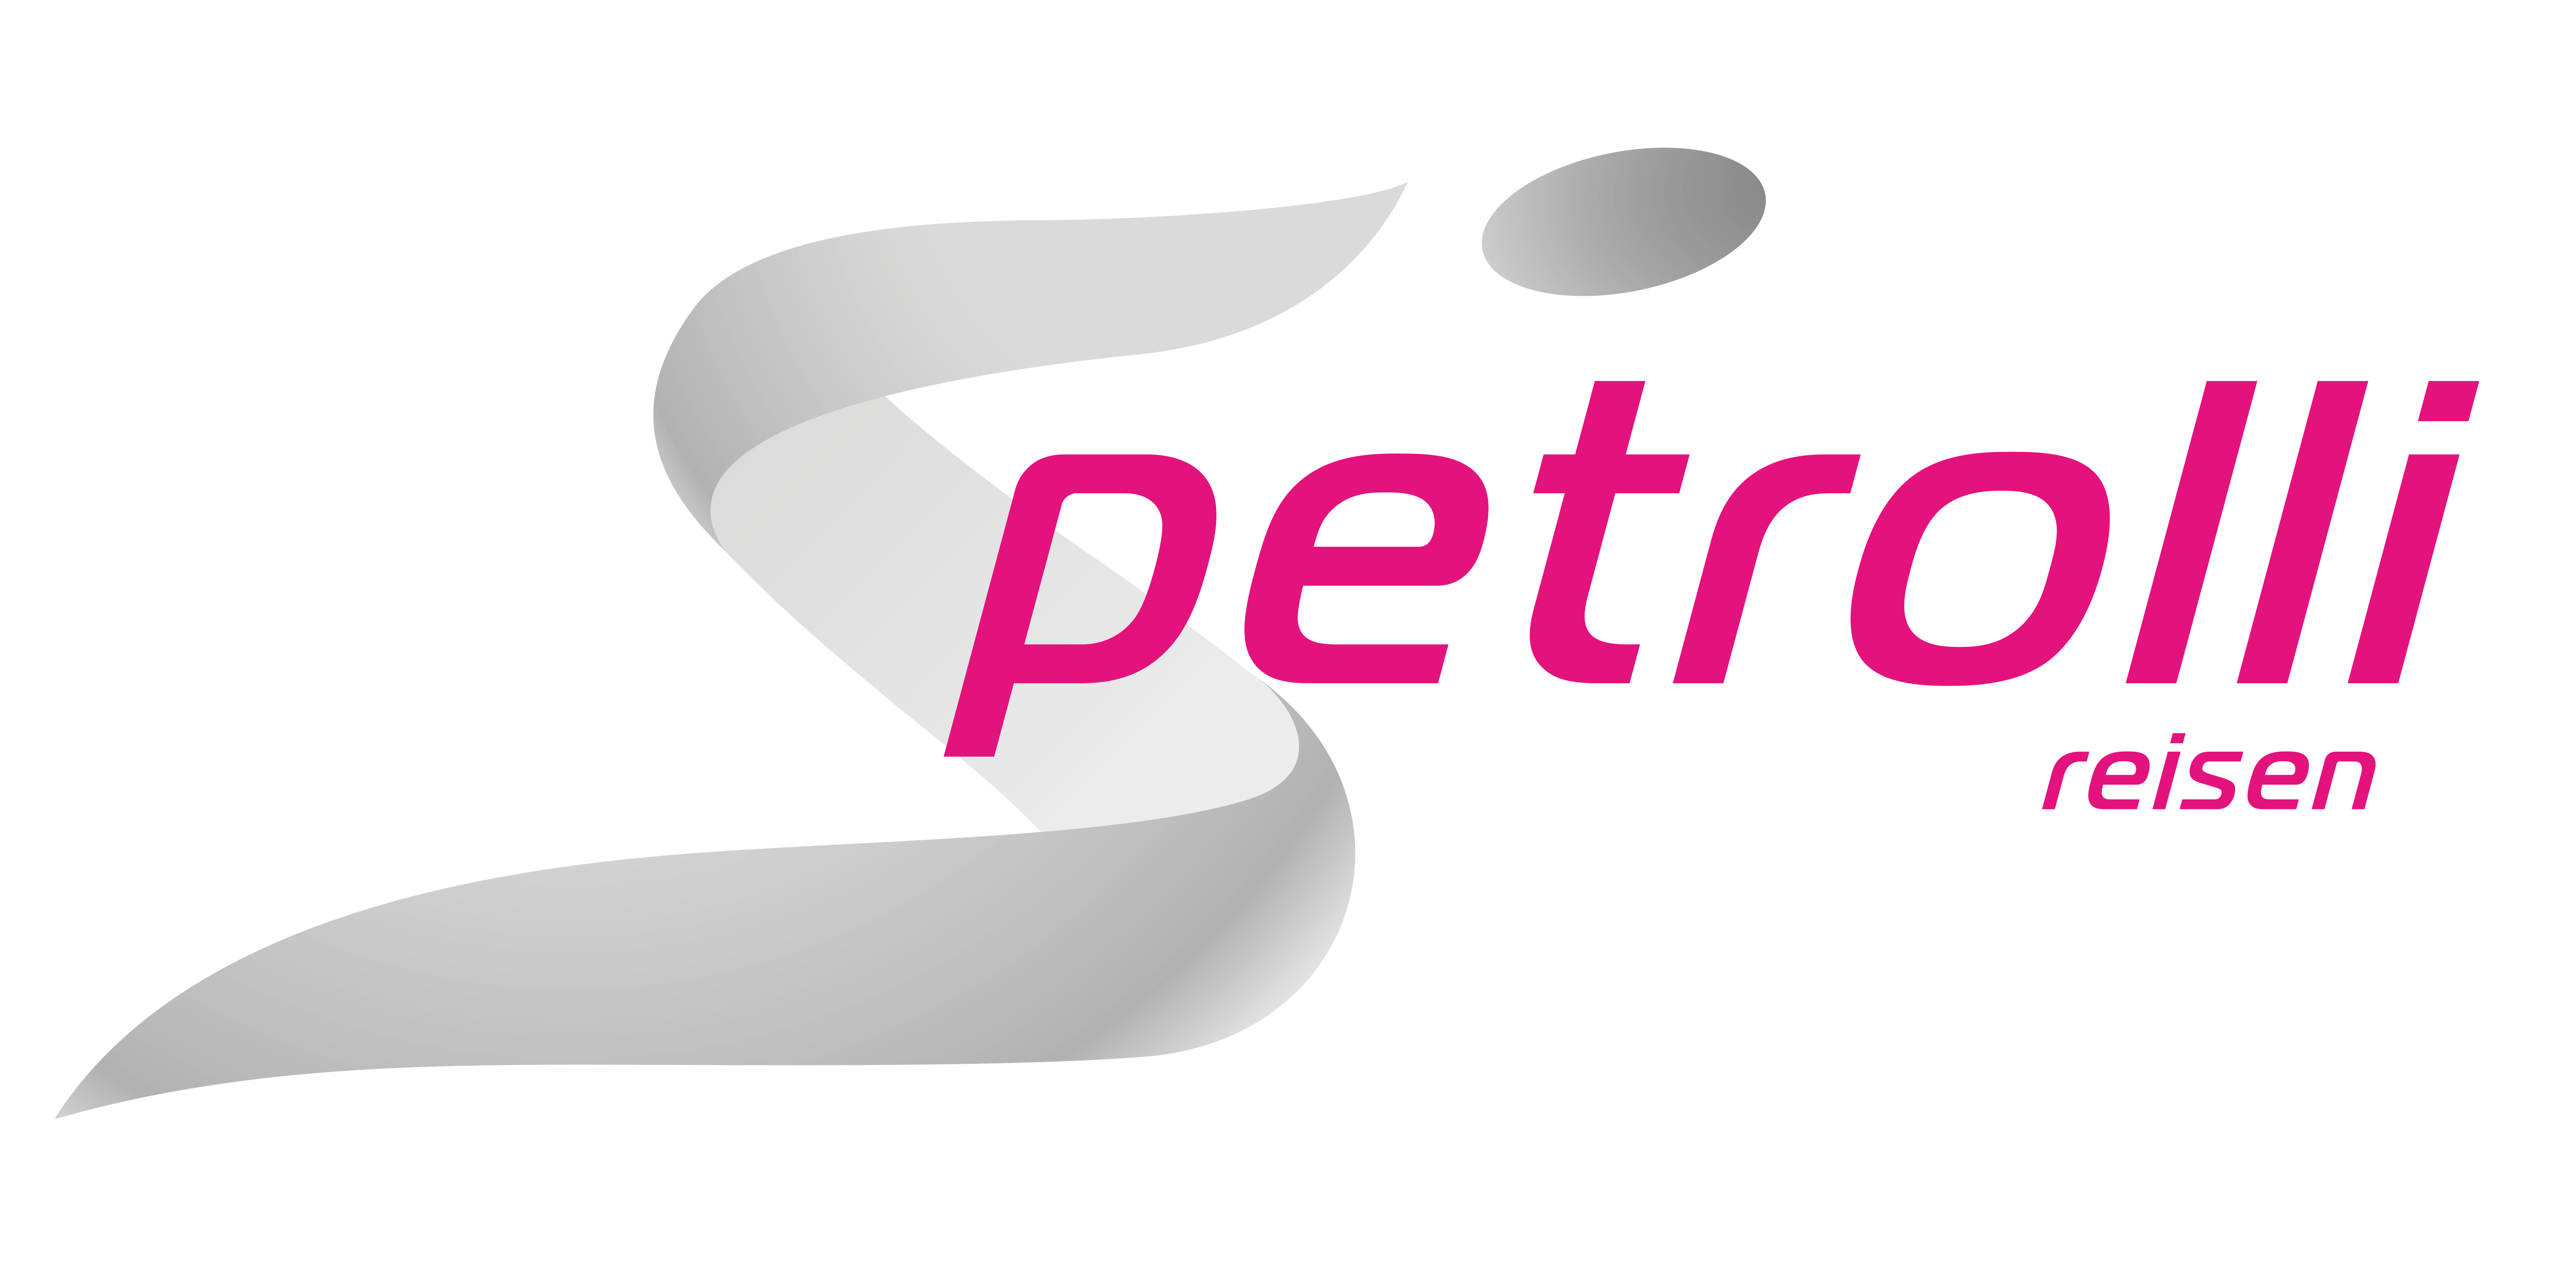 Petrolli Reisen - Logo